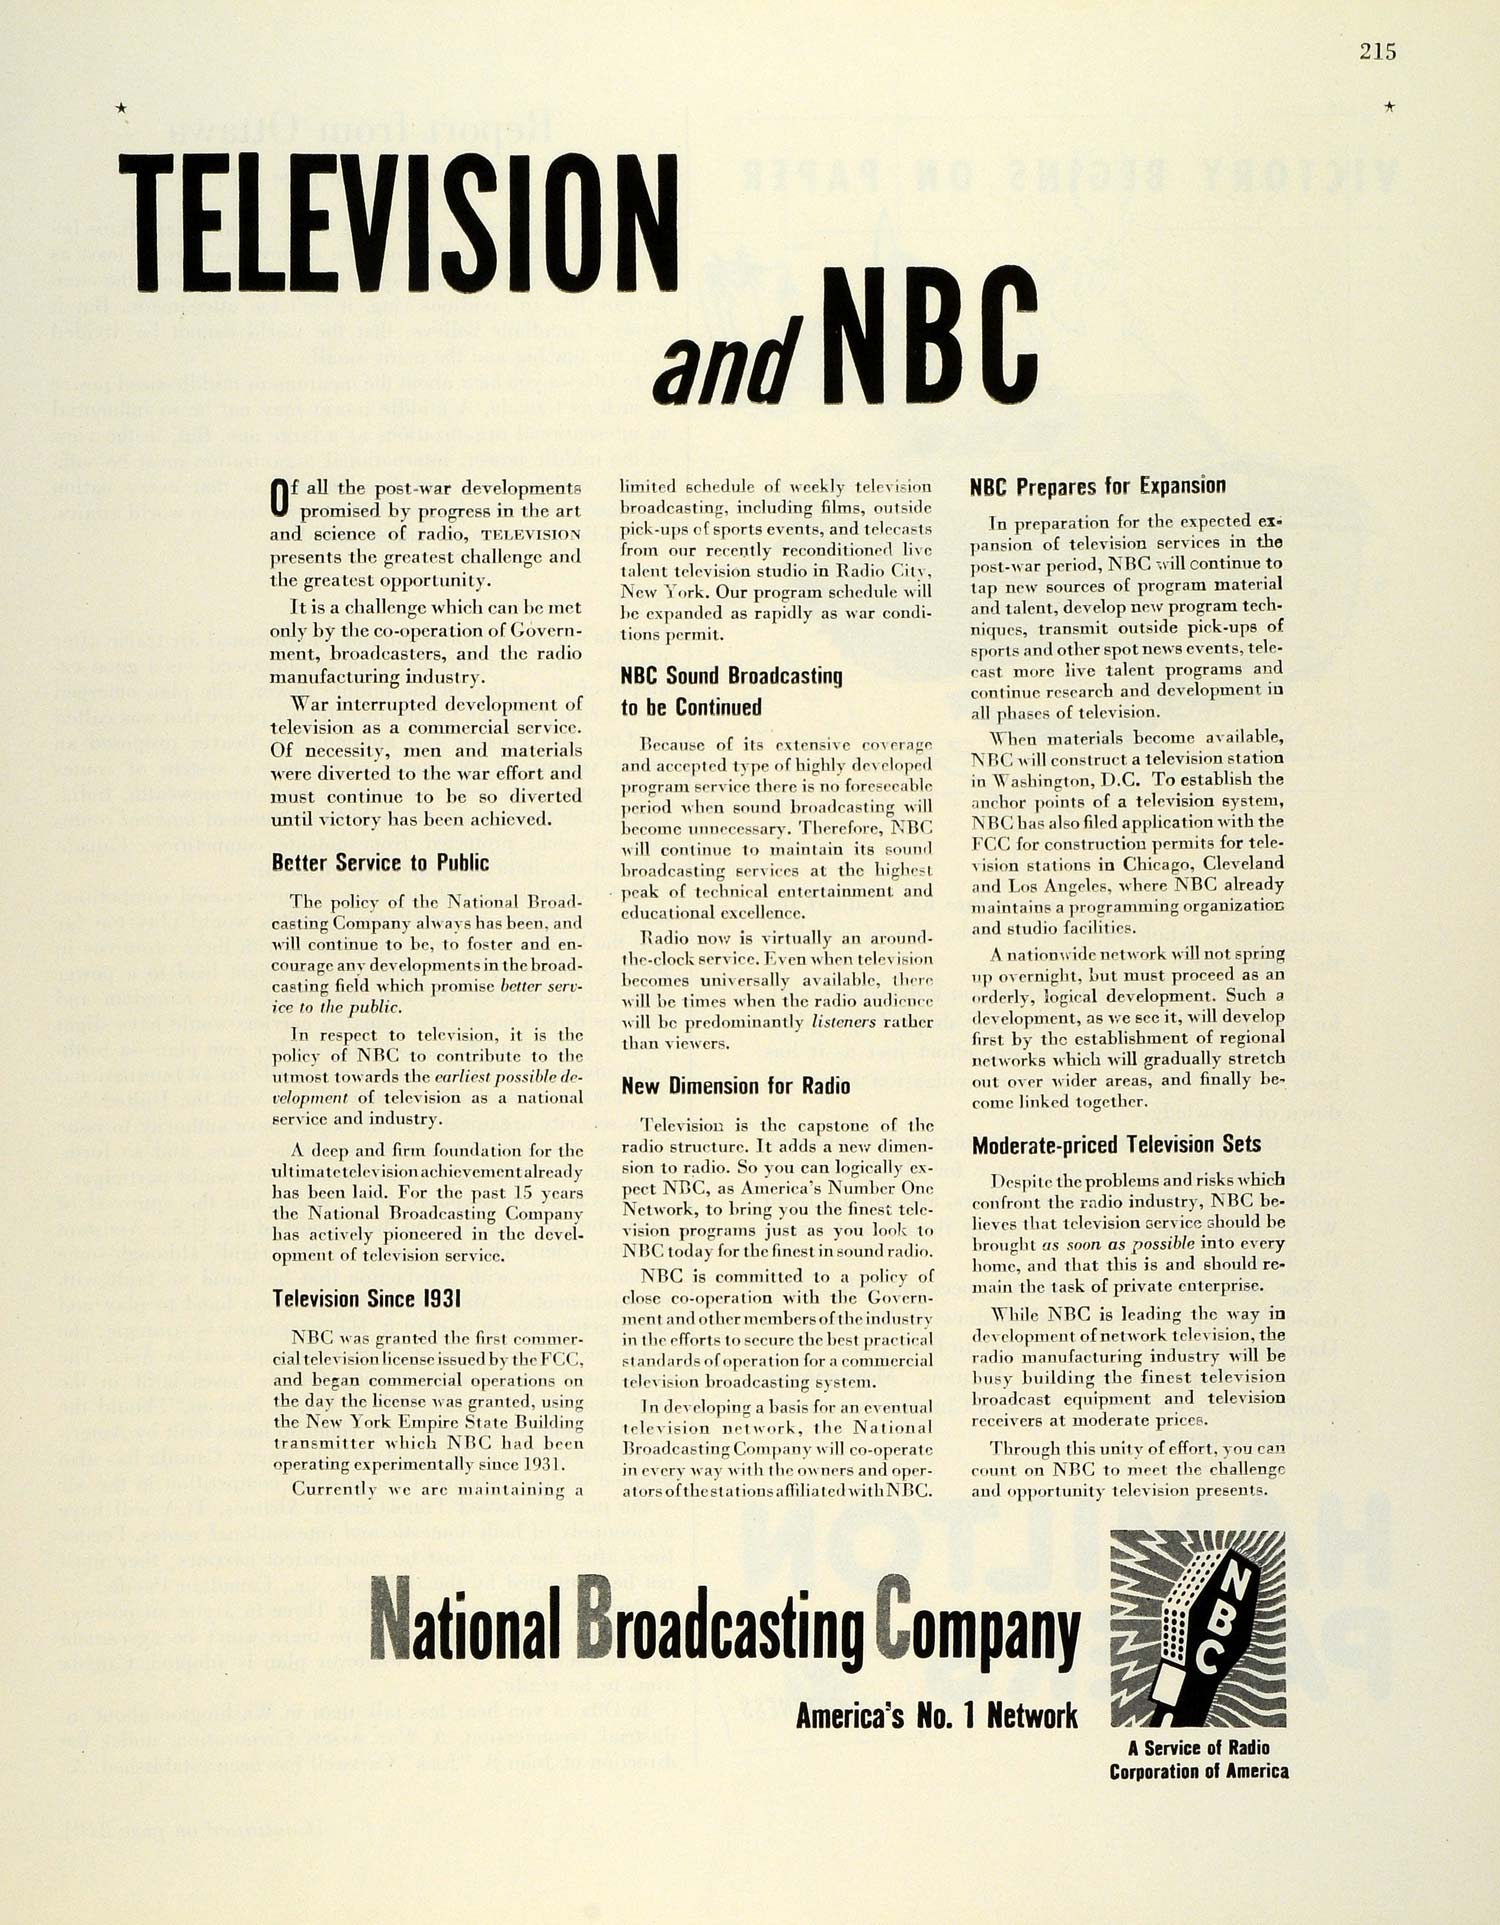 1944 Ad World War II Efforts National Broadcasting Company NBC Radio FZ6